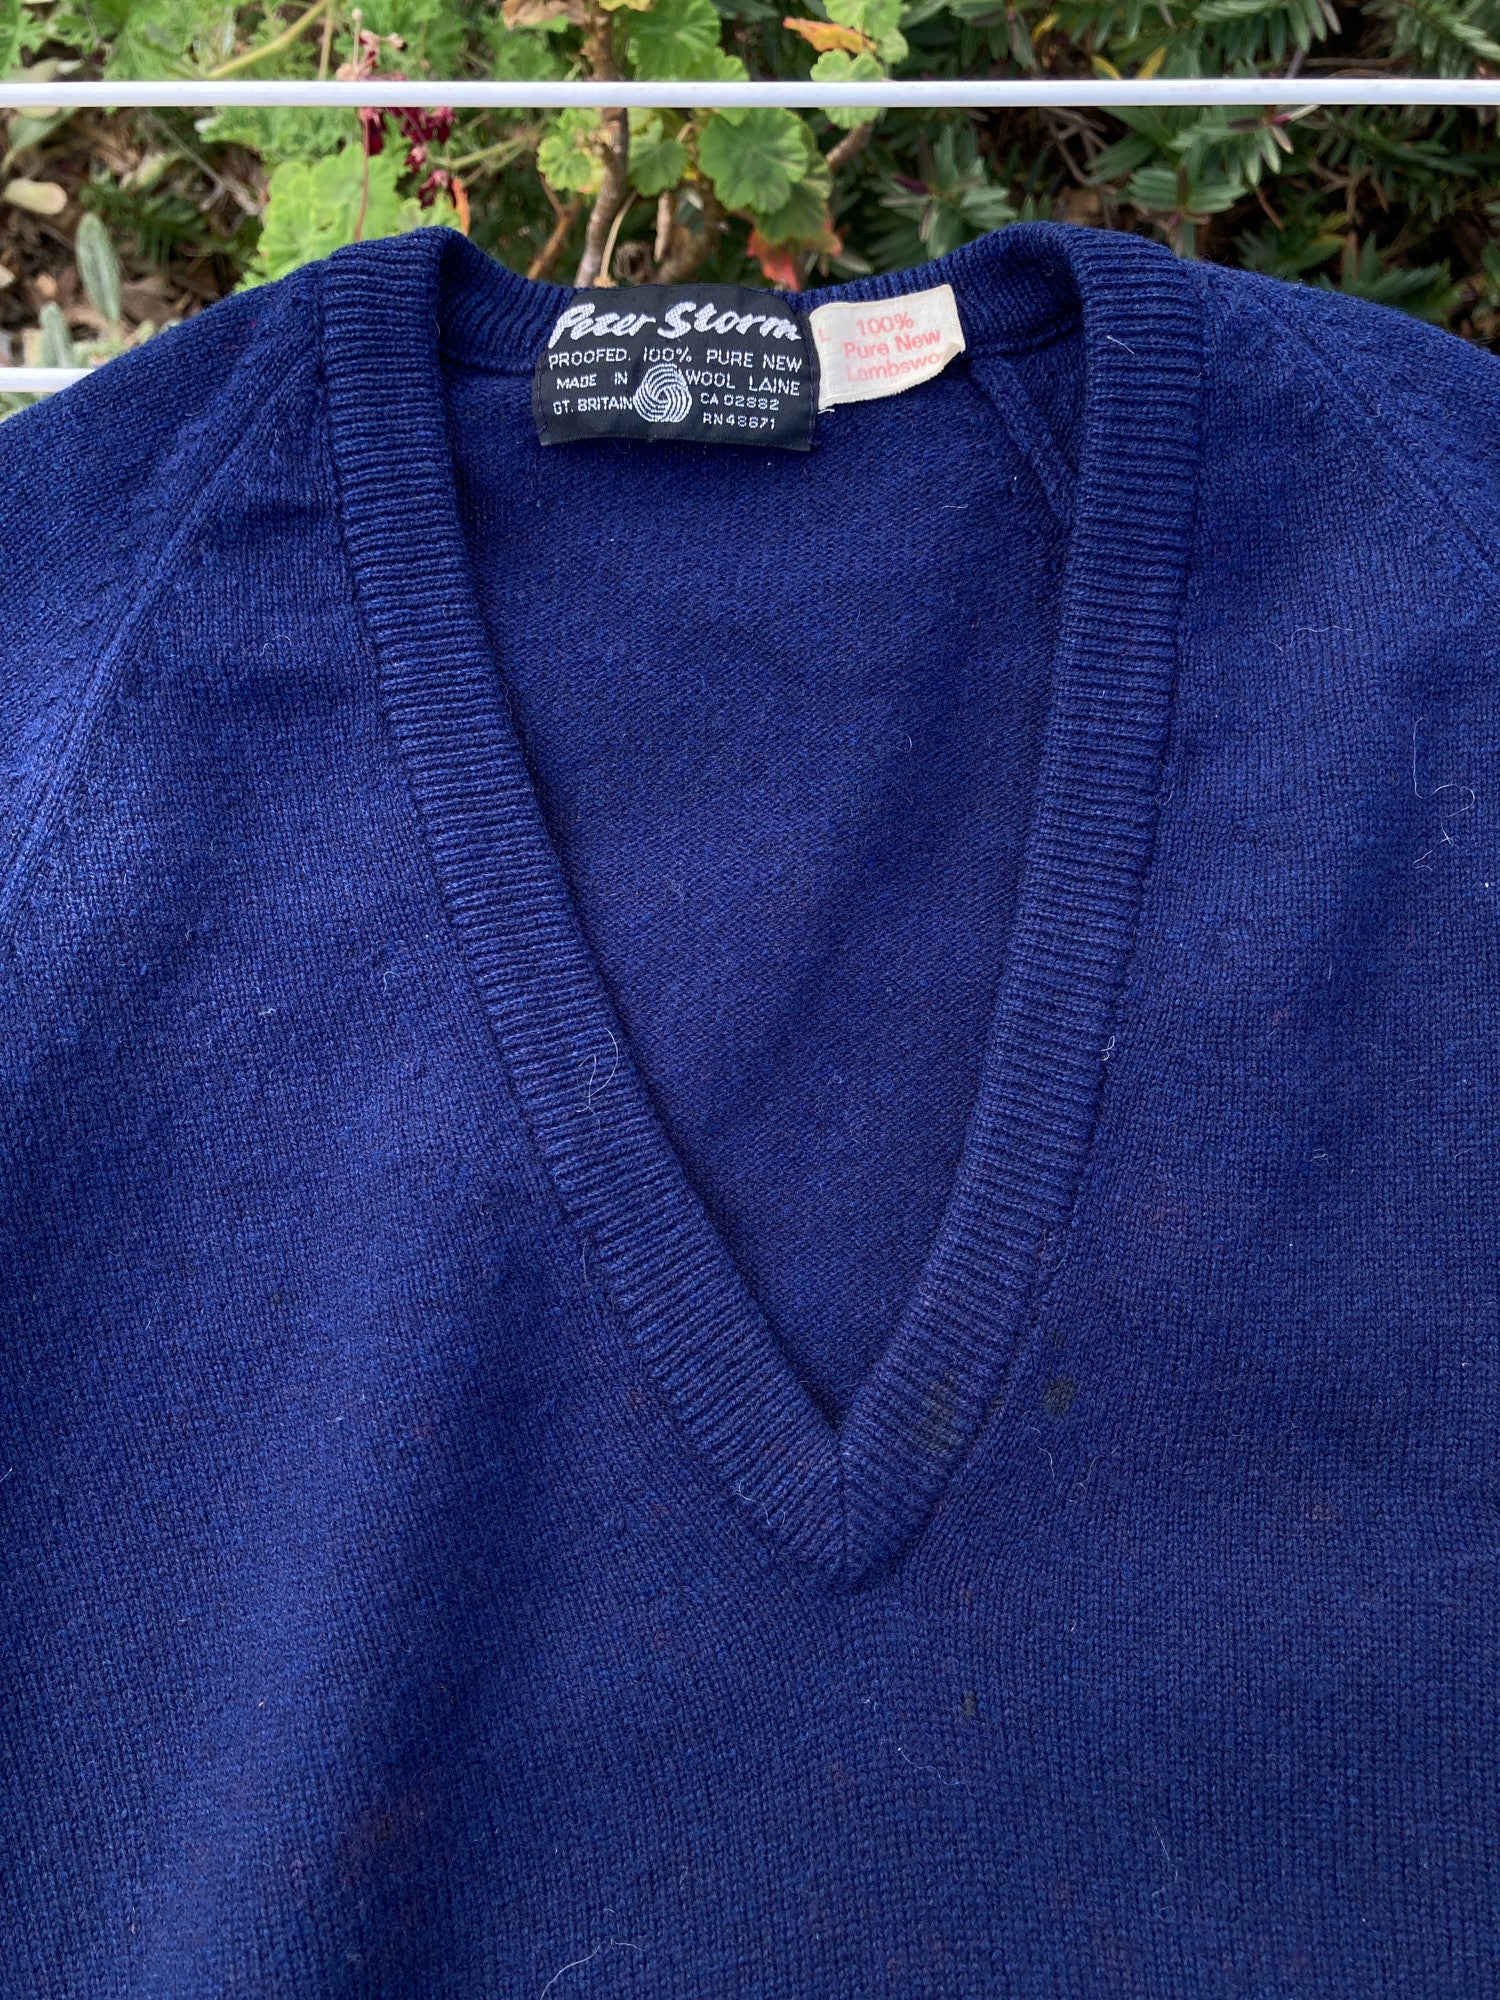 Peter Storm 1970s-80s navy proofed wool v neck neck jumper - L